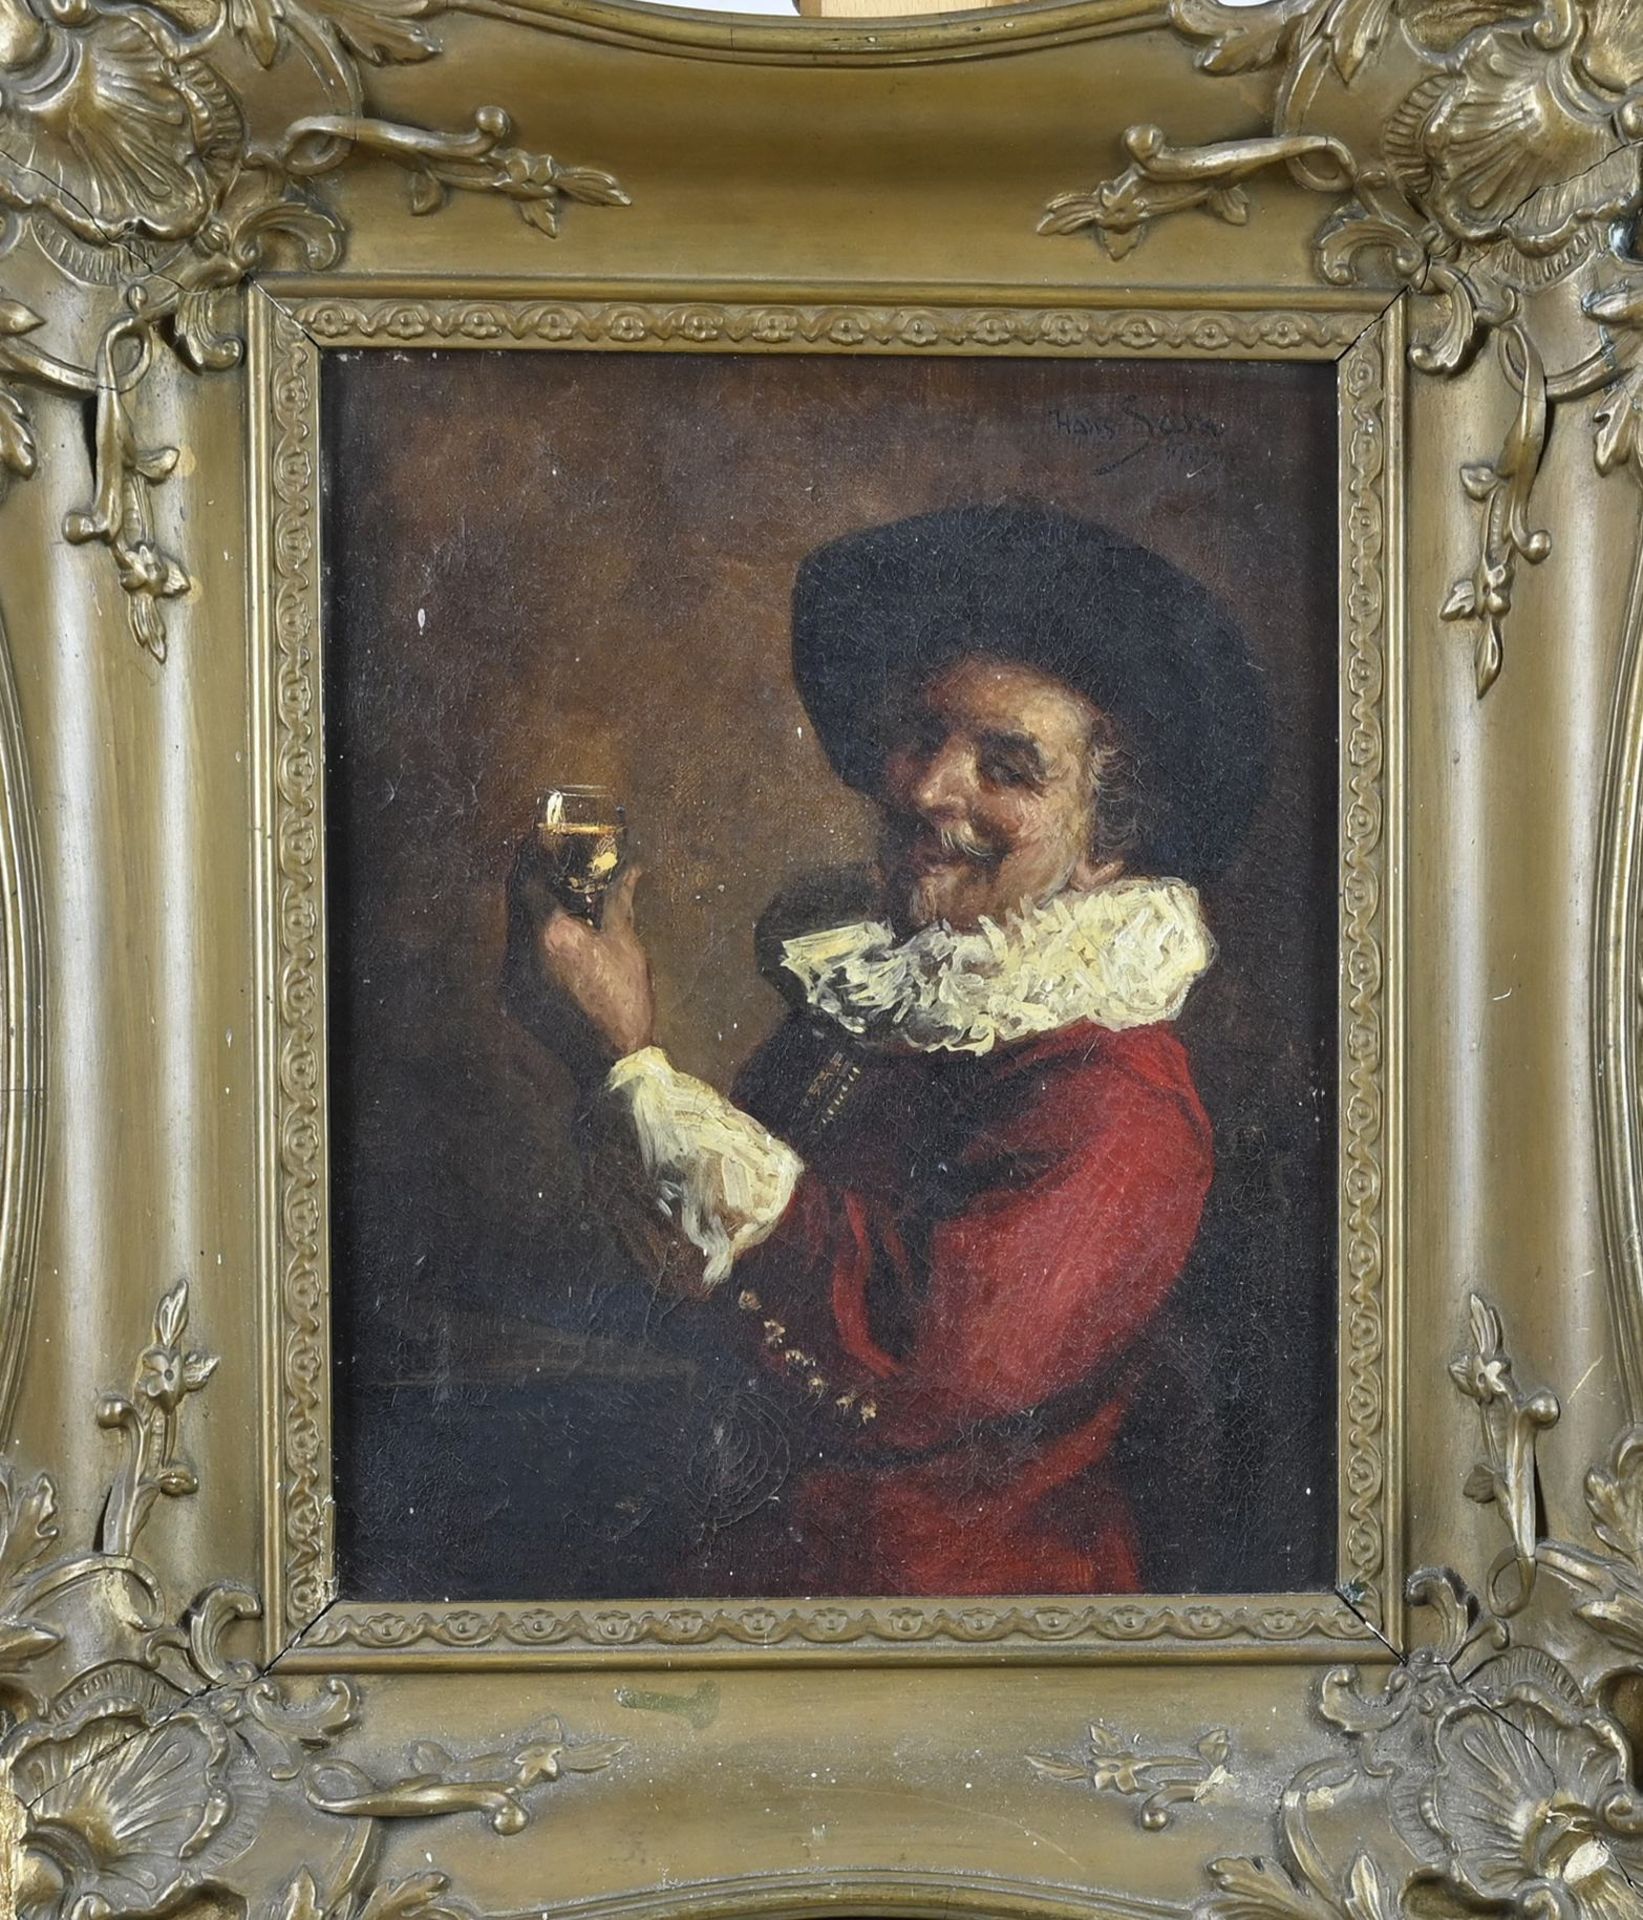 Hans Sam, 17th Century figure with wine glass